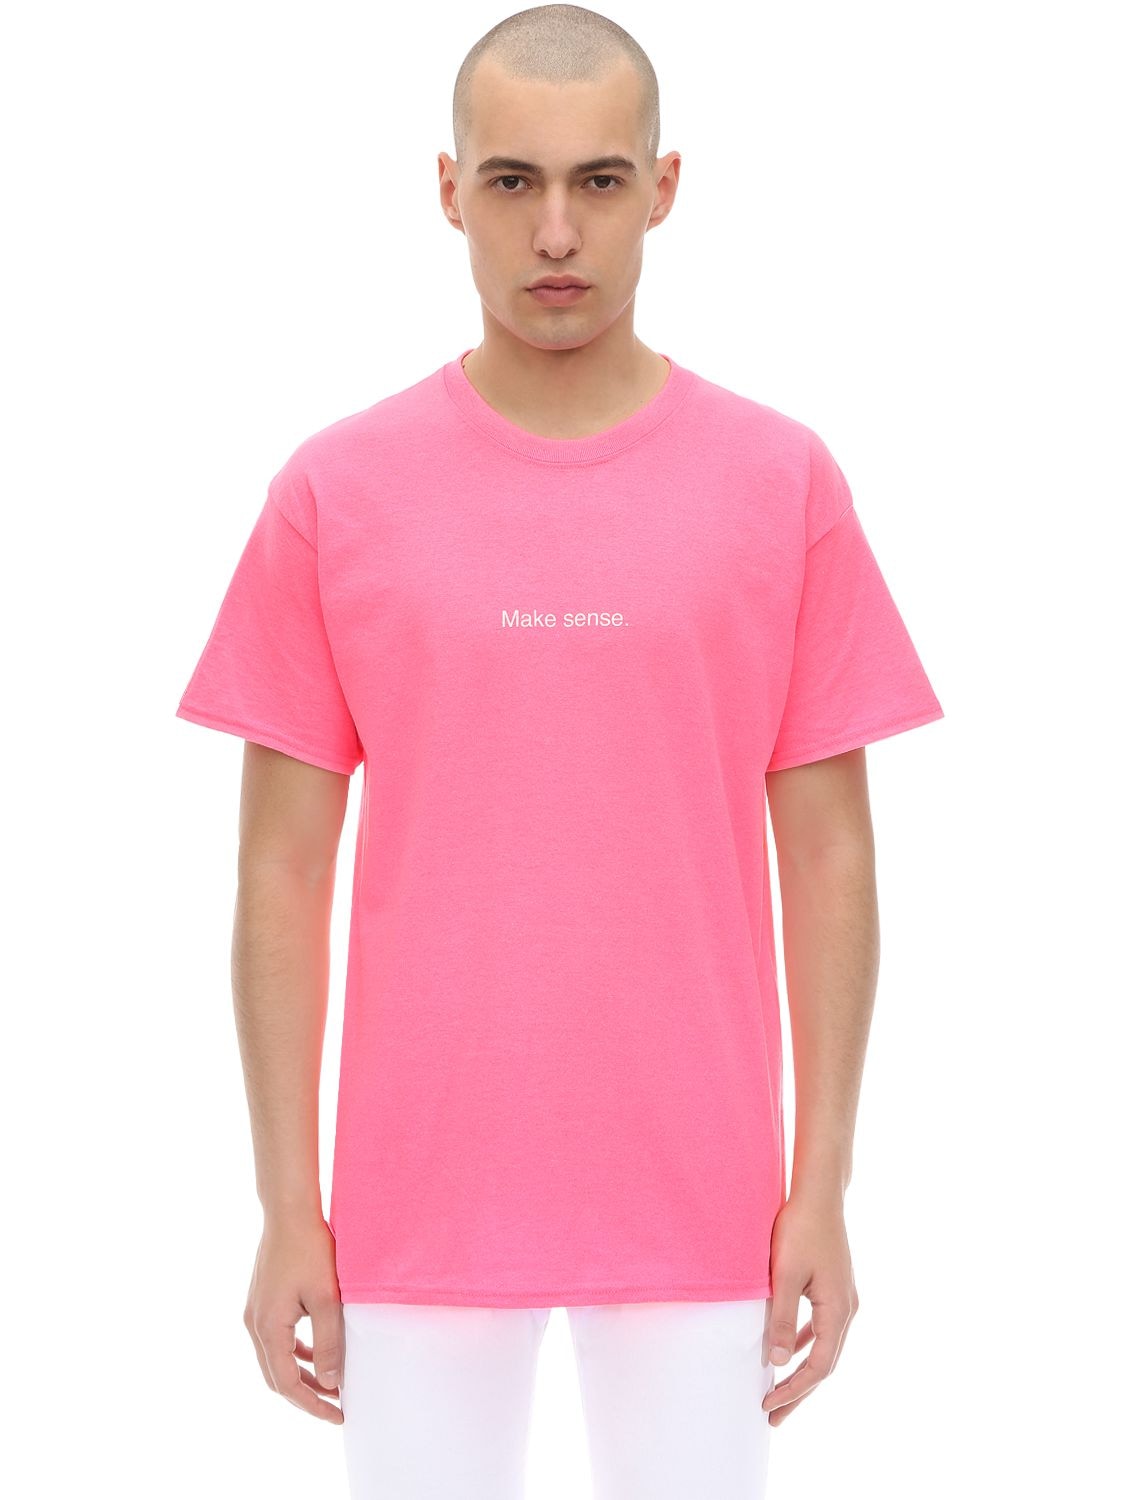 Famt - Fuck Art Make Tees Make Sense Cotton Jersey T-shirt In Neon Pink